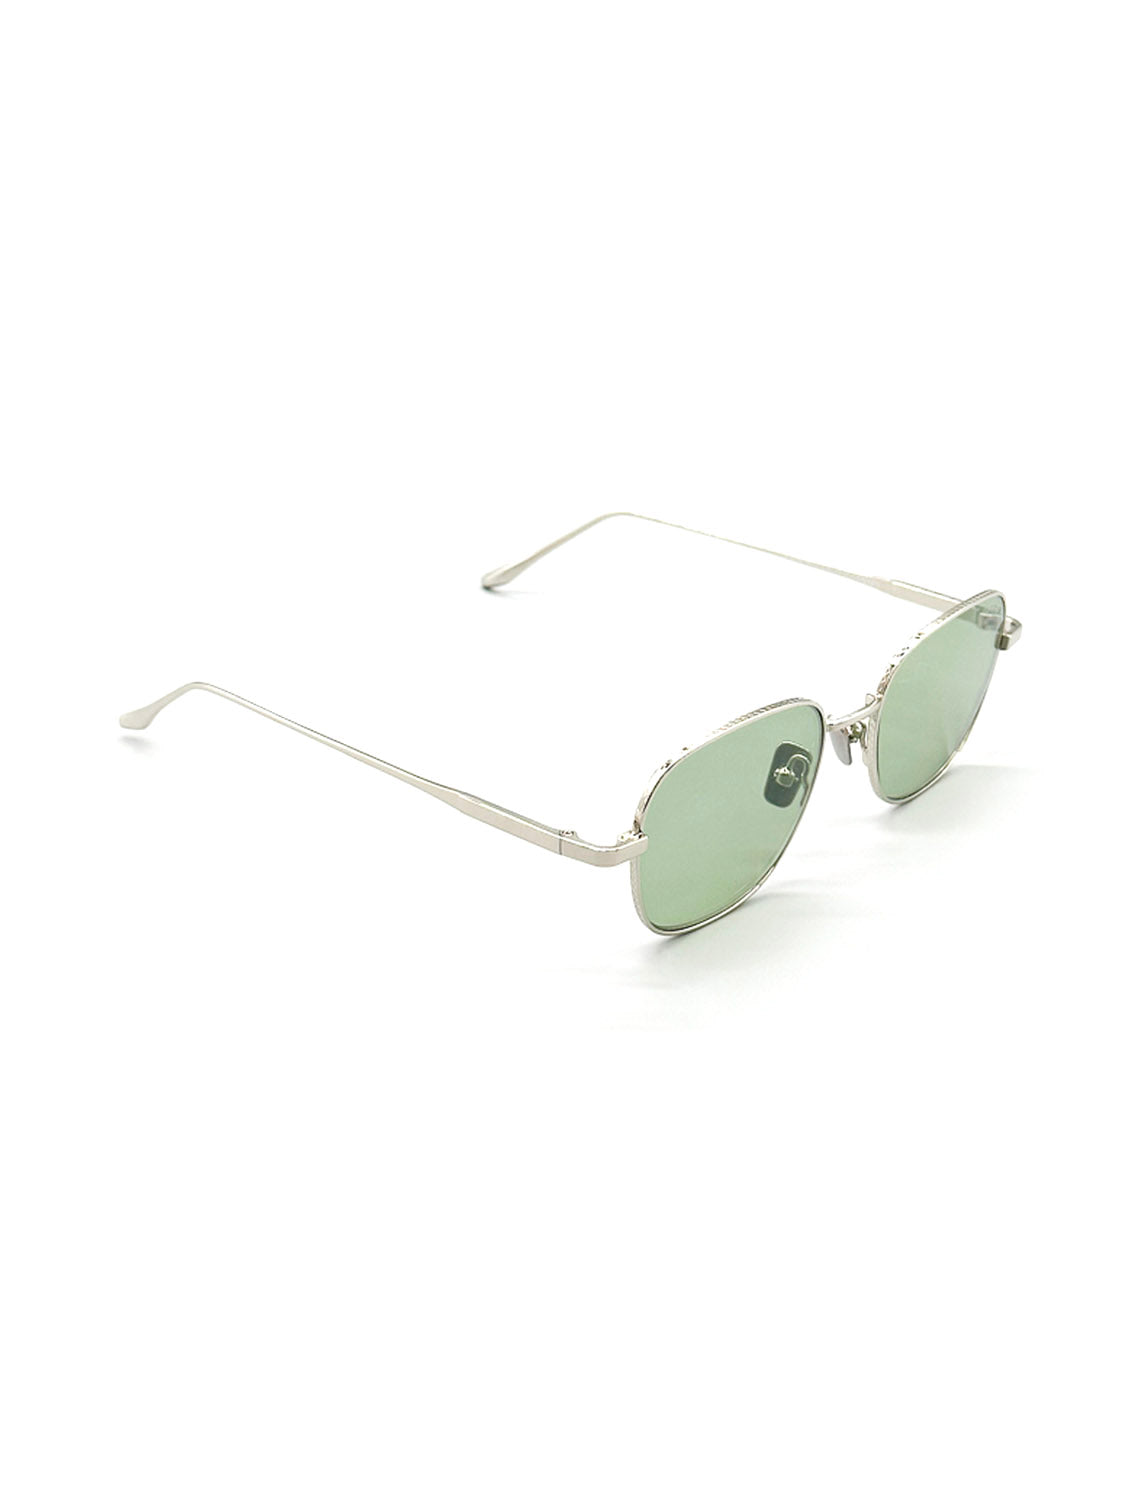 M425LG Polarized Sunglasses